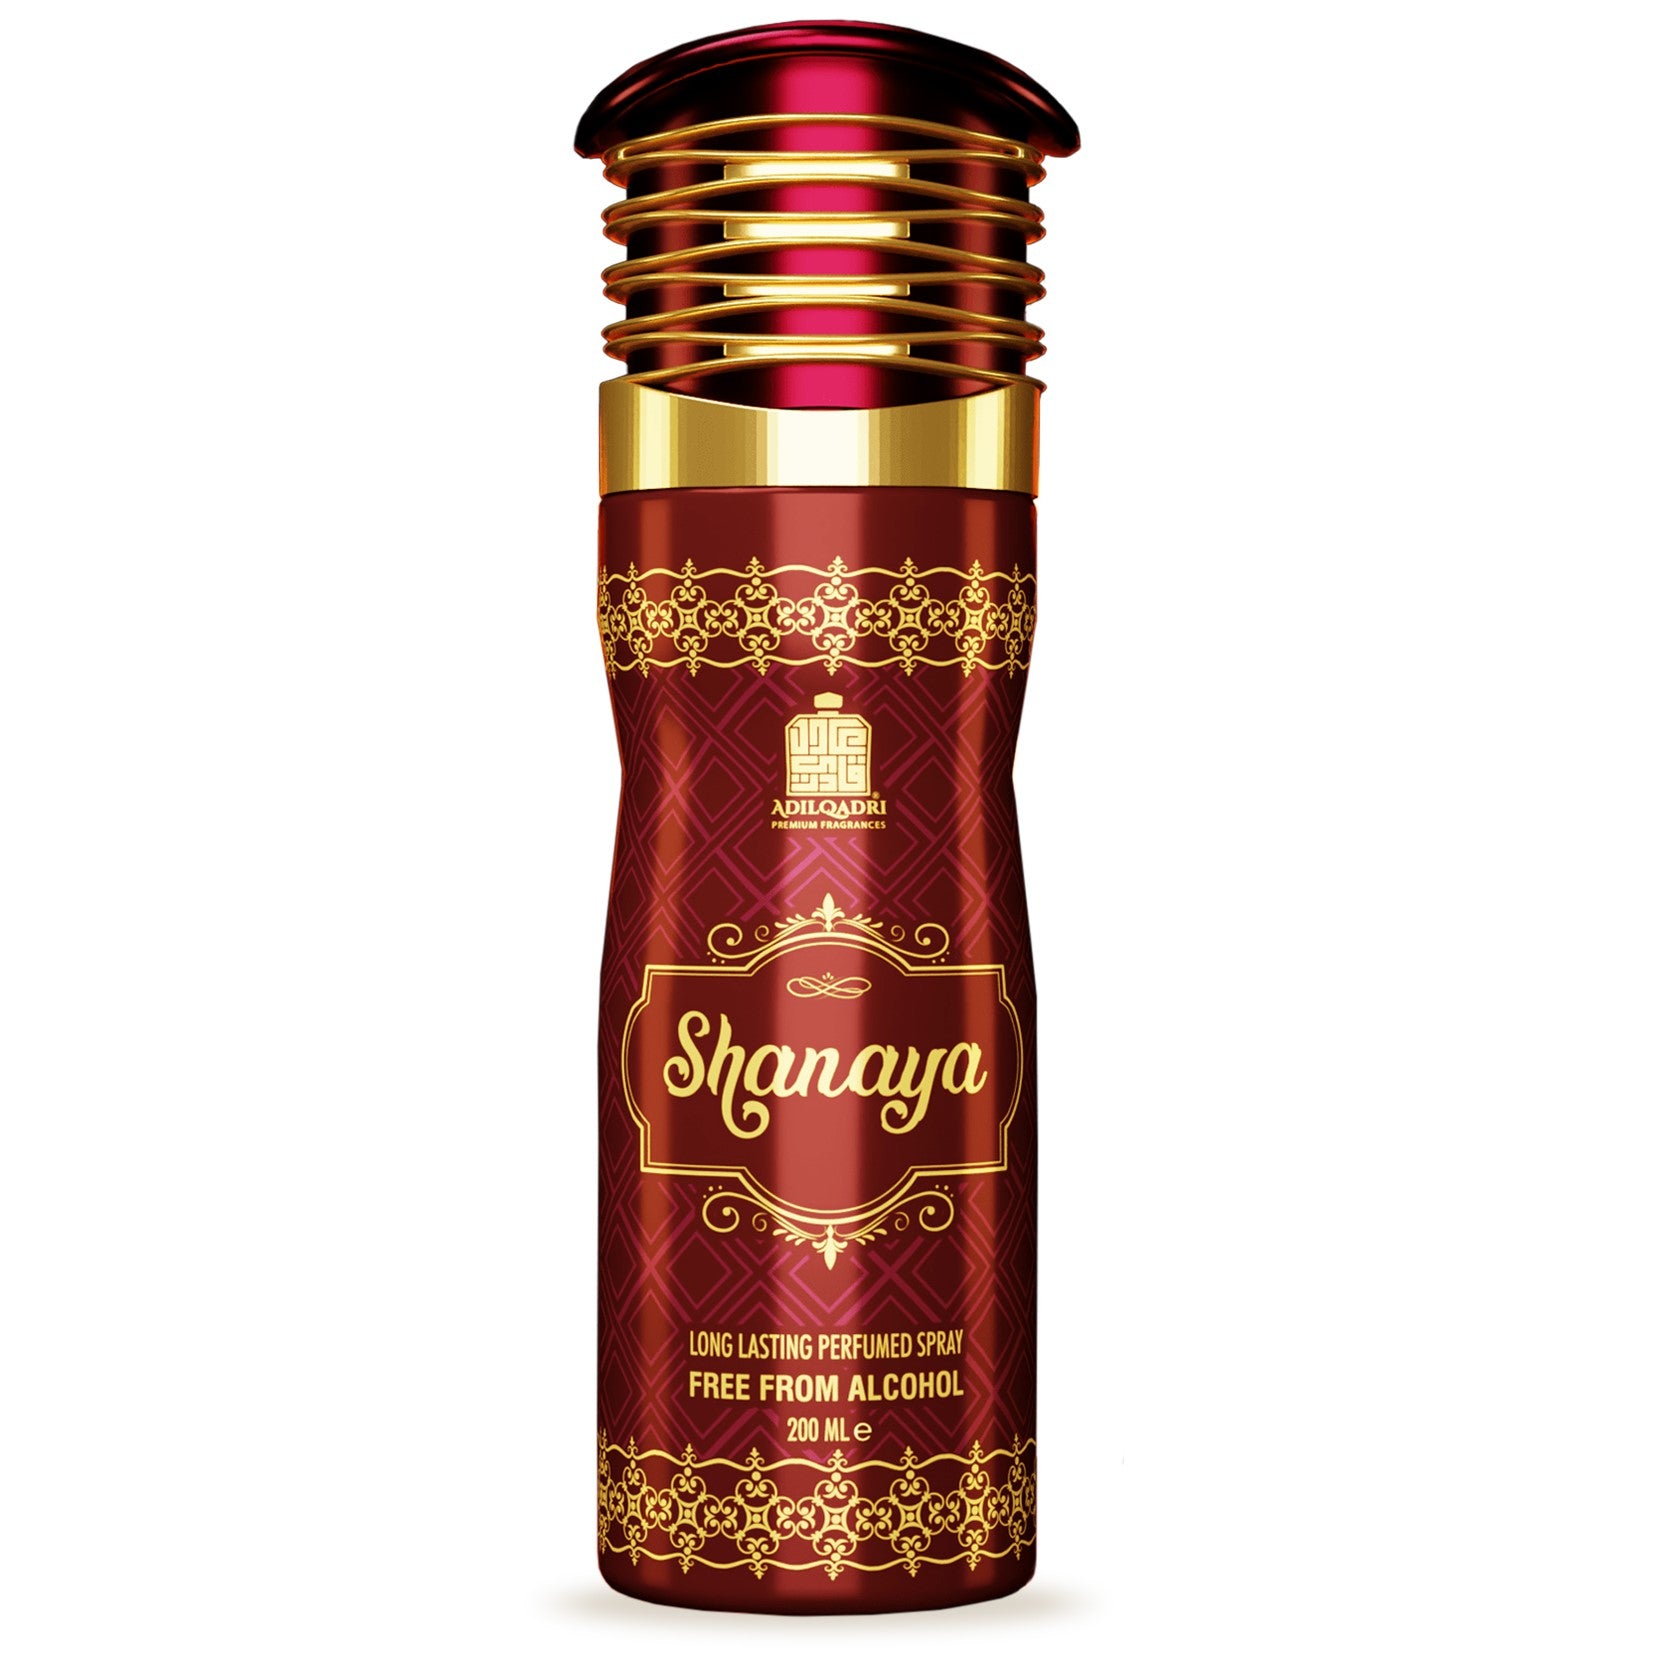 Shanaya Alcohol Free Premium Deodorant Body Spray